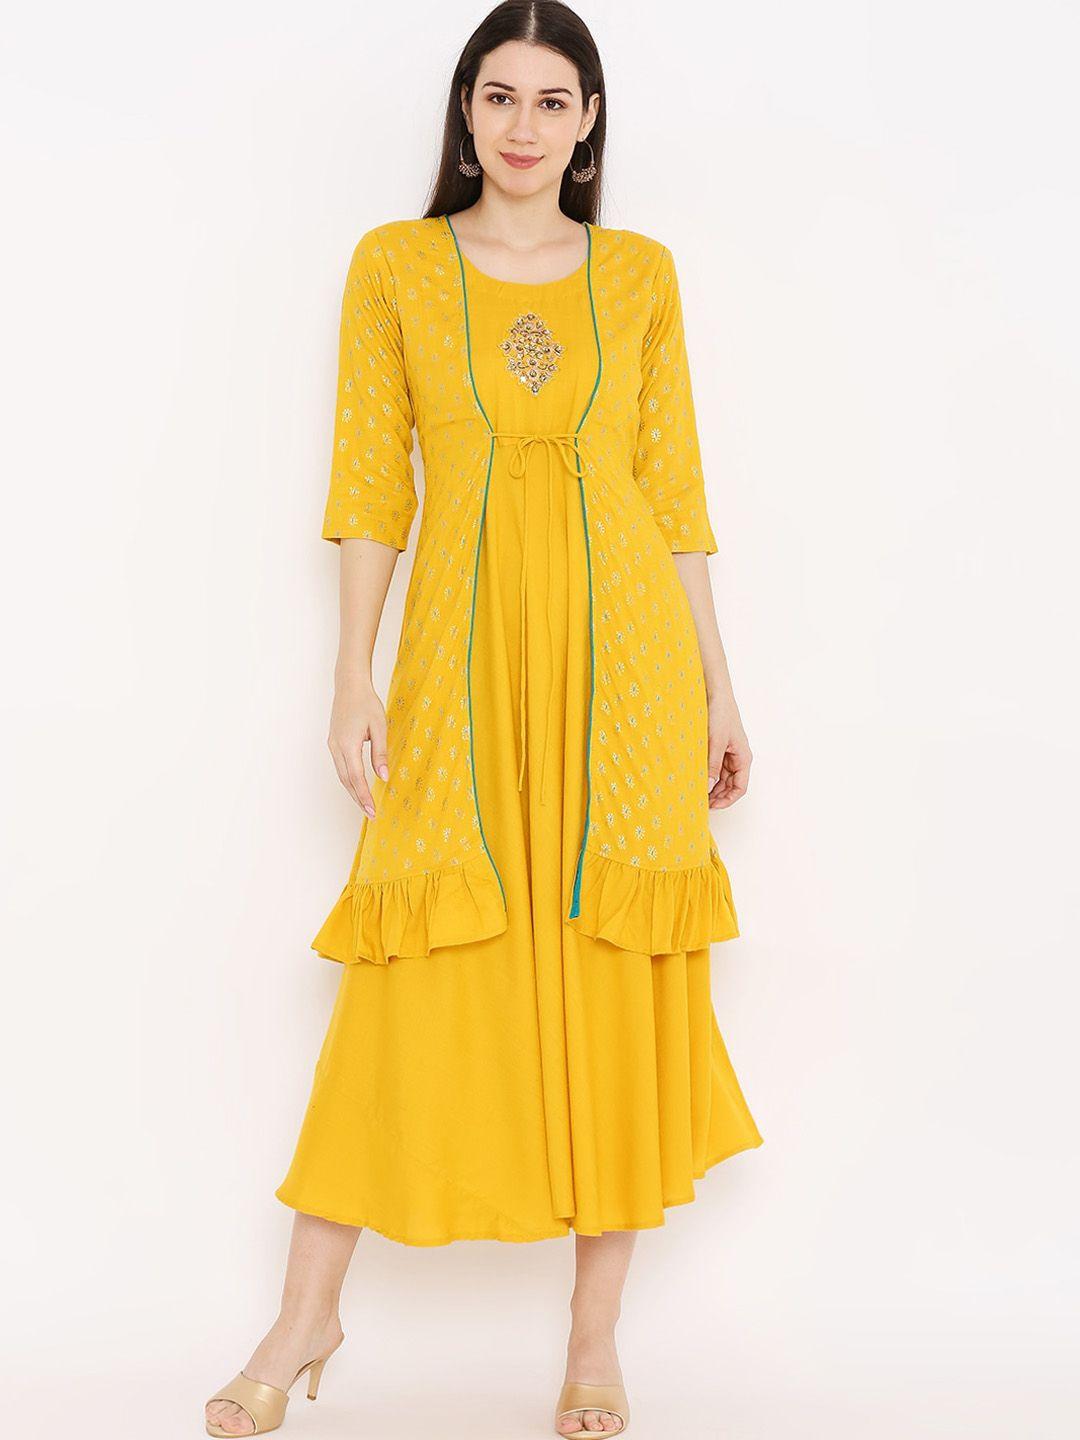 peppertree yellow & golden ethnic motifs layered ethnic midi dress